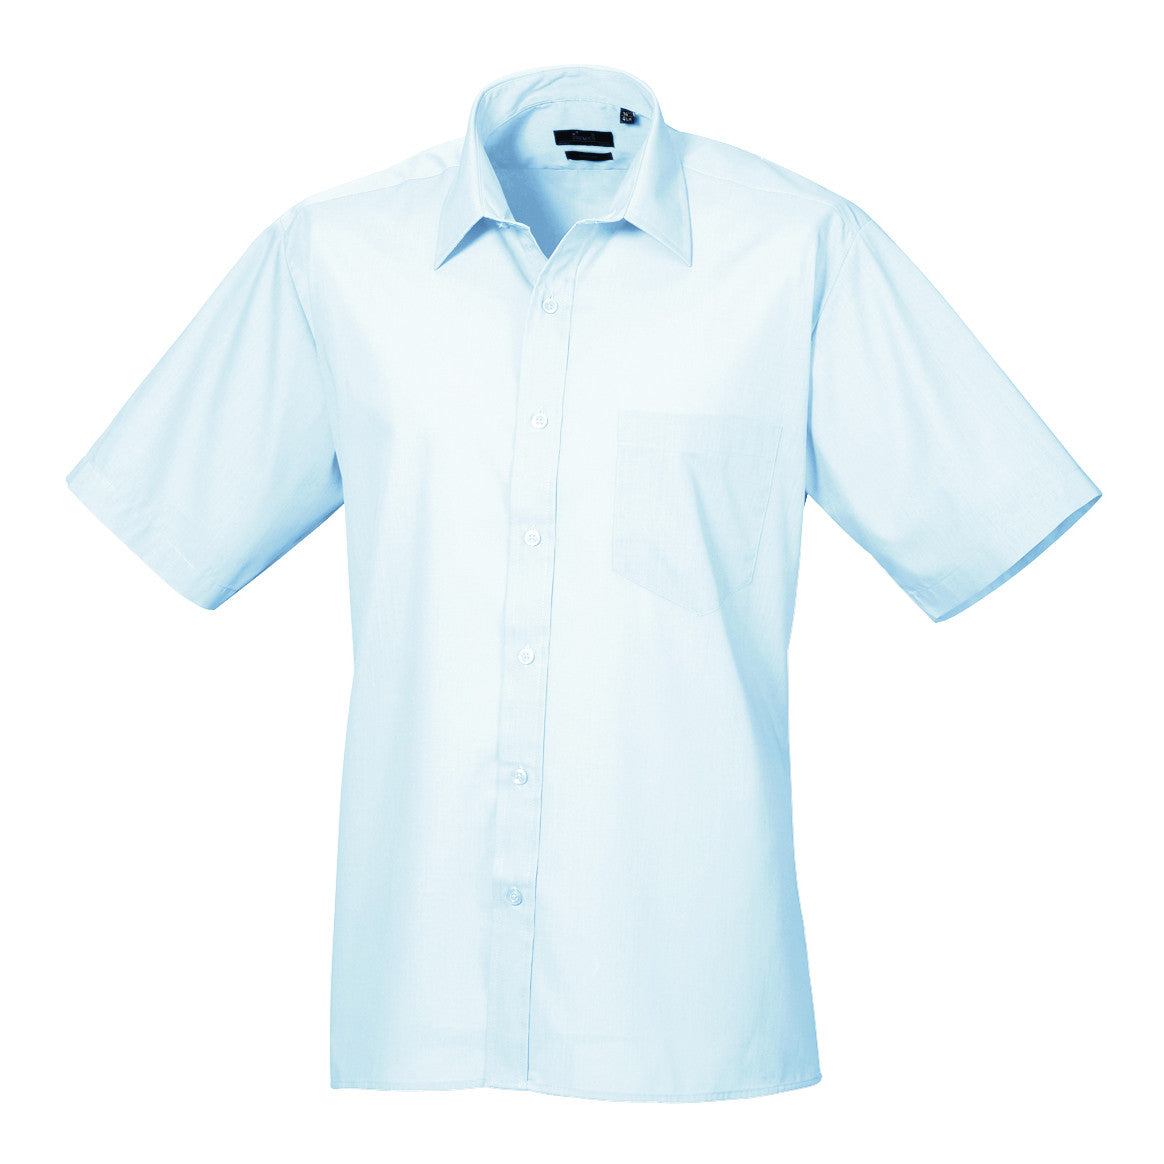 Premier Poplin Shirts (Sapphire, Turquoise, Light Blue, Mid Blue, Royal) - peterdrew.com
 - 2